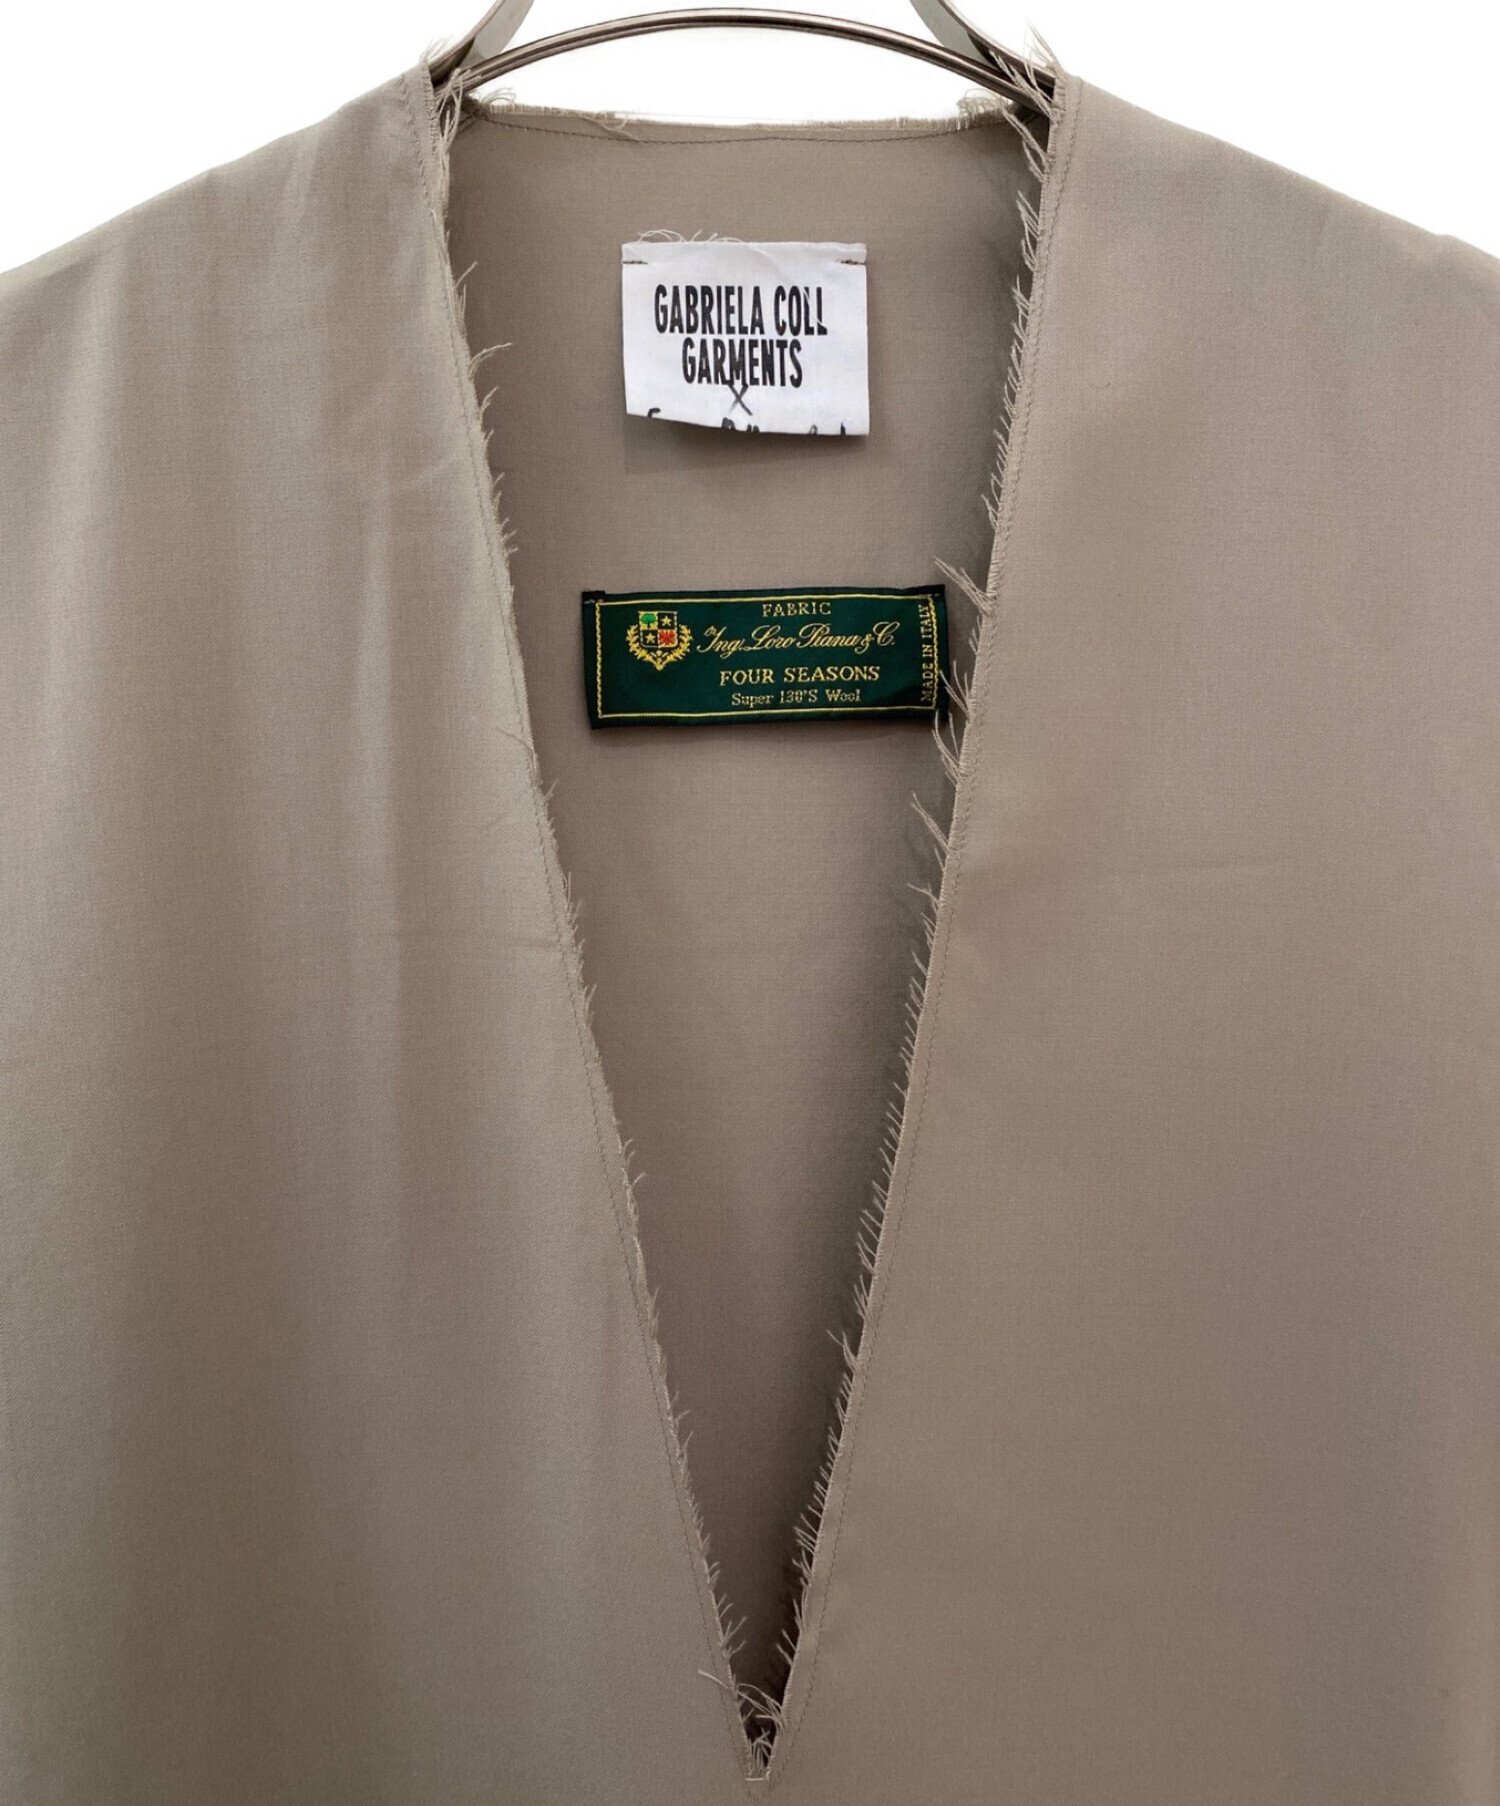 gabriela coll garments (ガブリエラコールガーメンツ) カットオフノースリーブマキシワンピース ベージュ サイズ:S